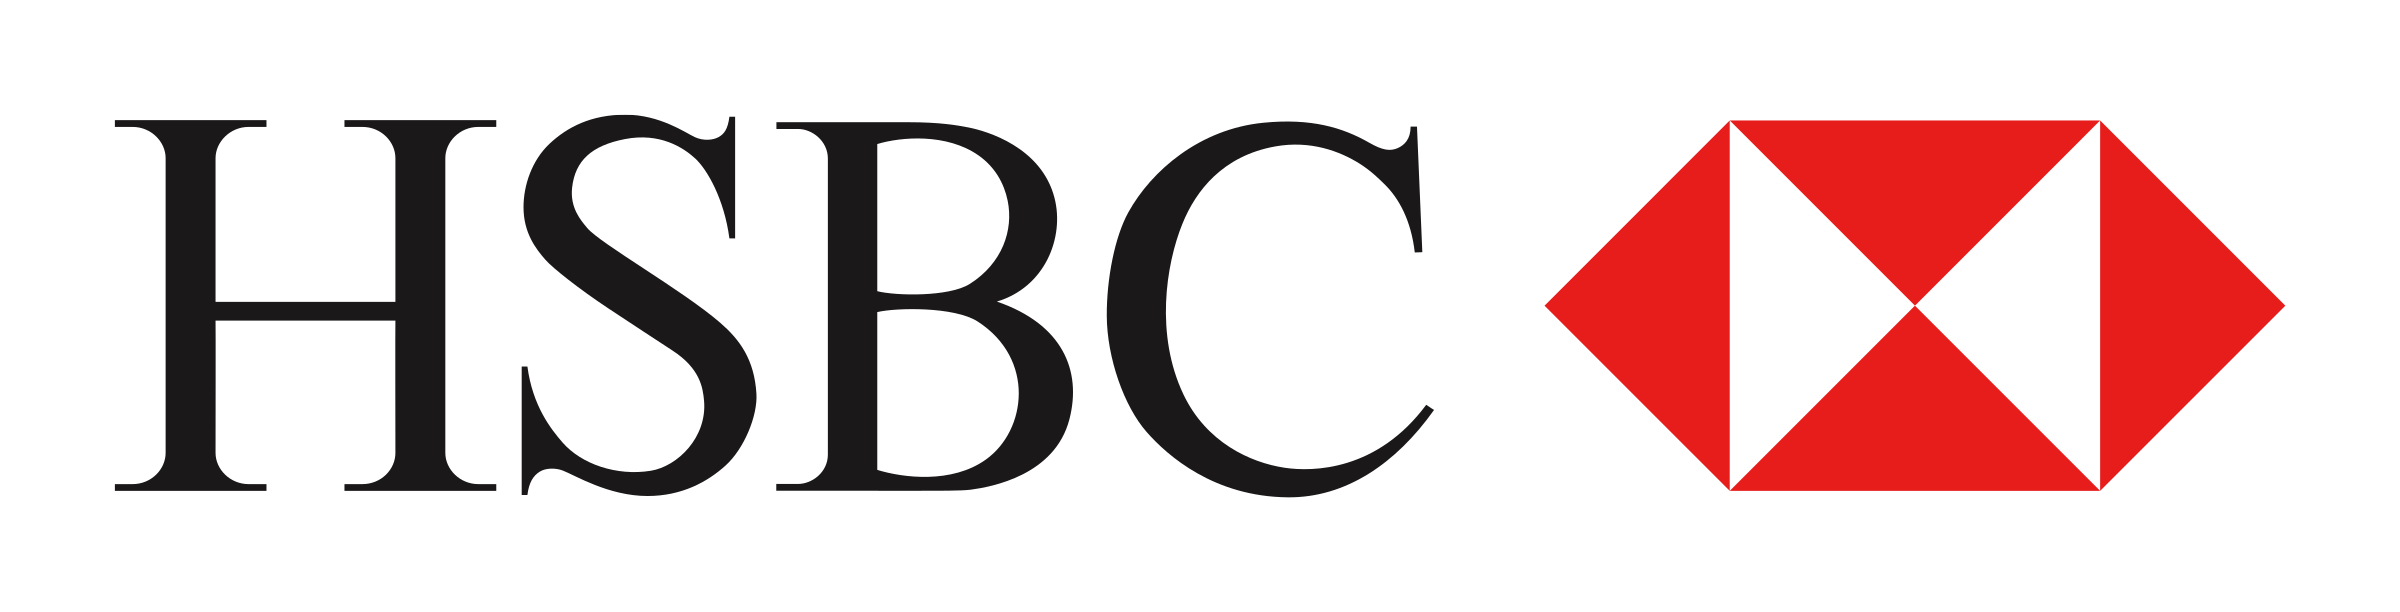 Hsbc Logo PNG - 175869